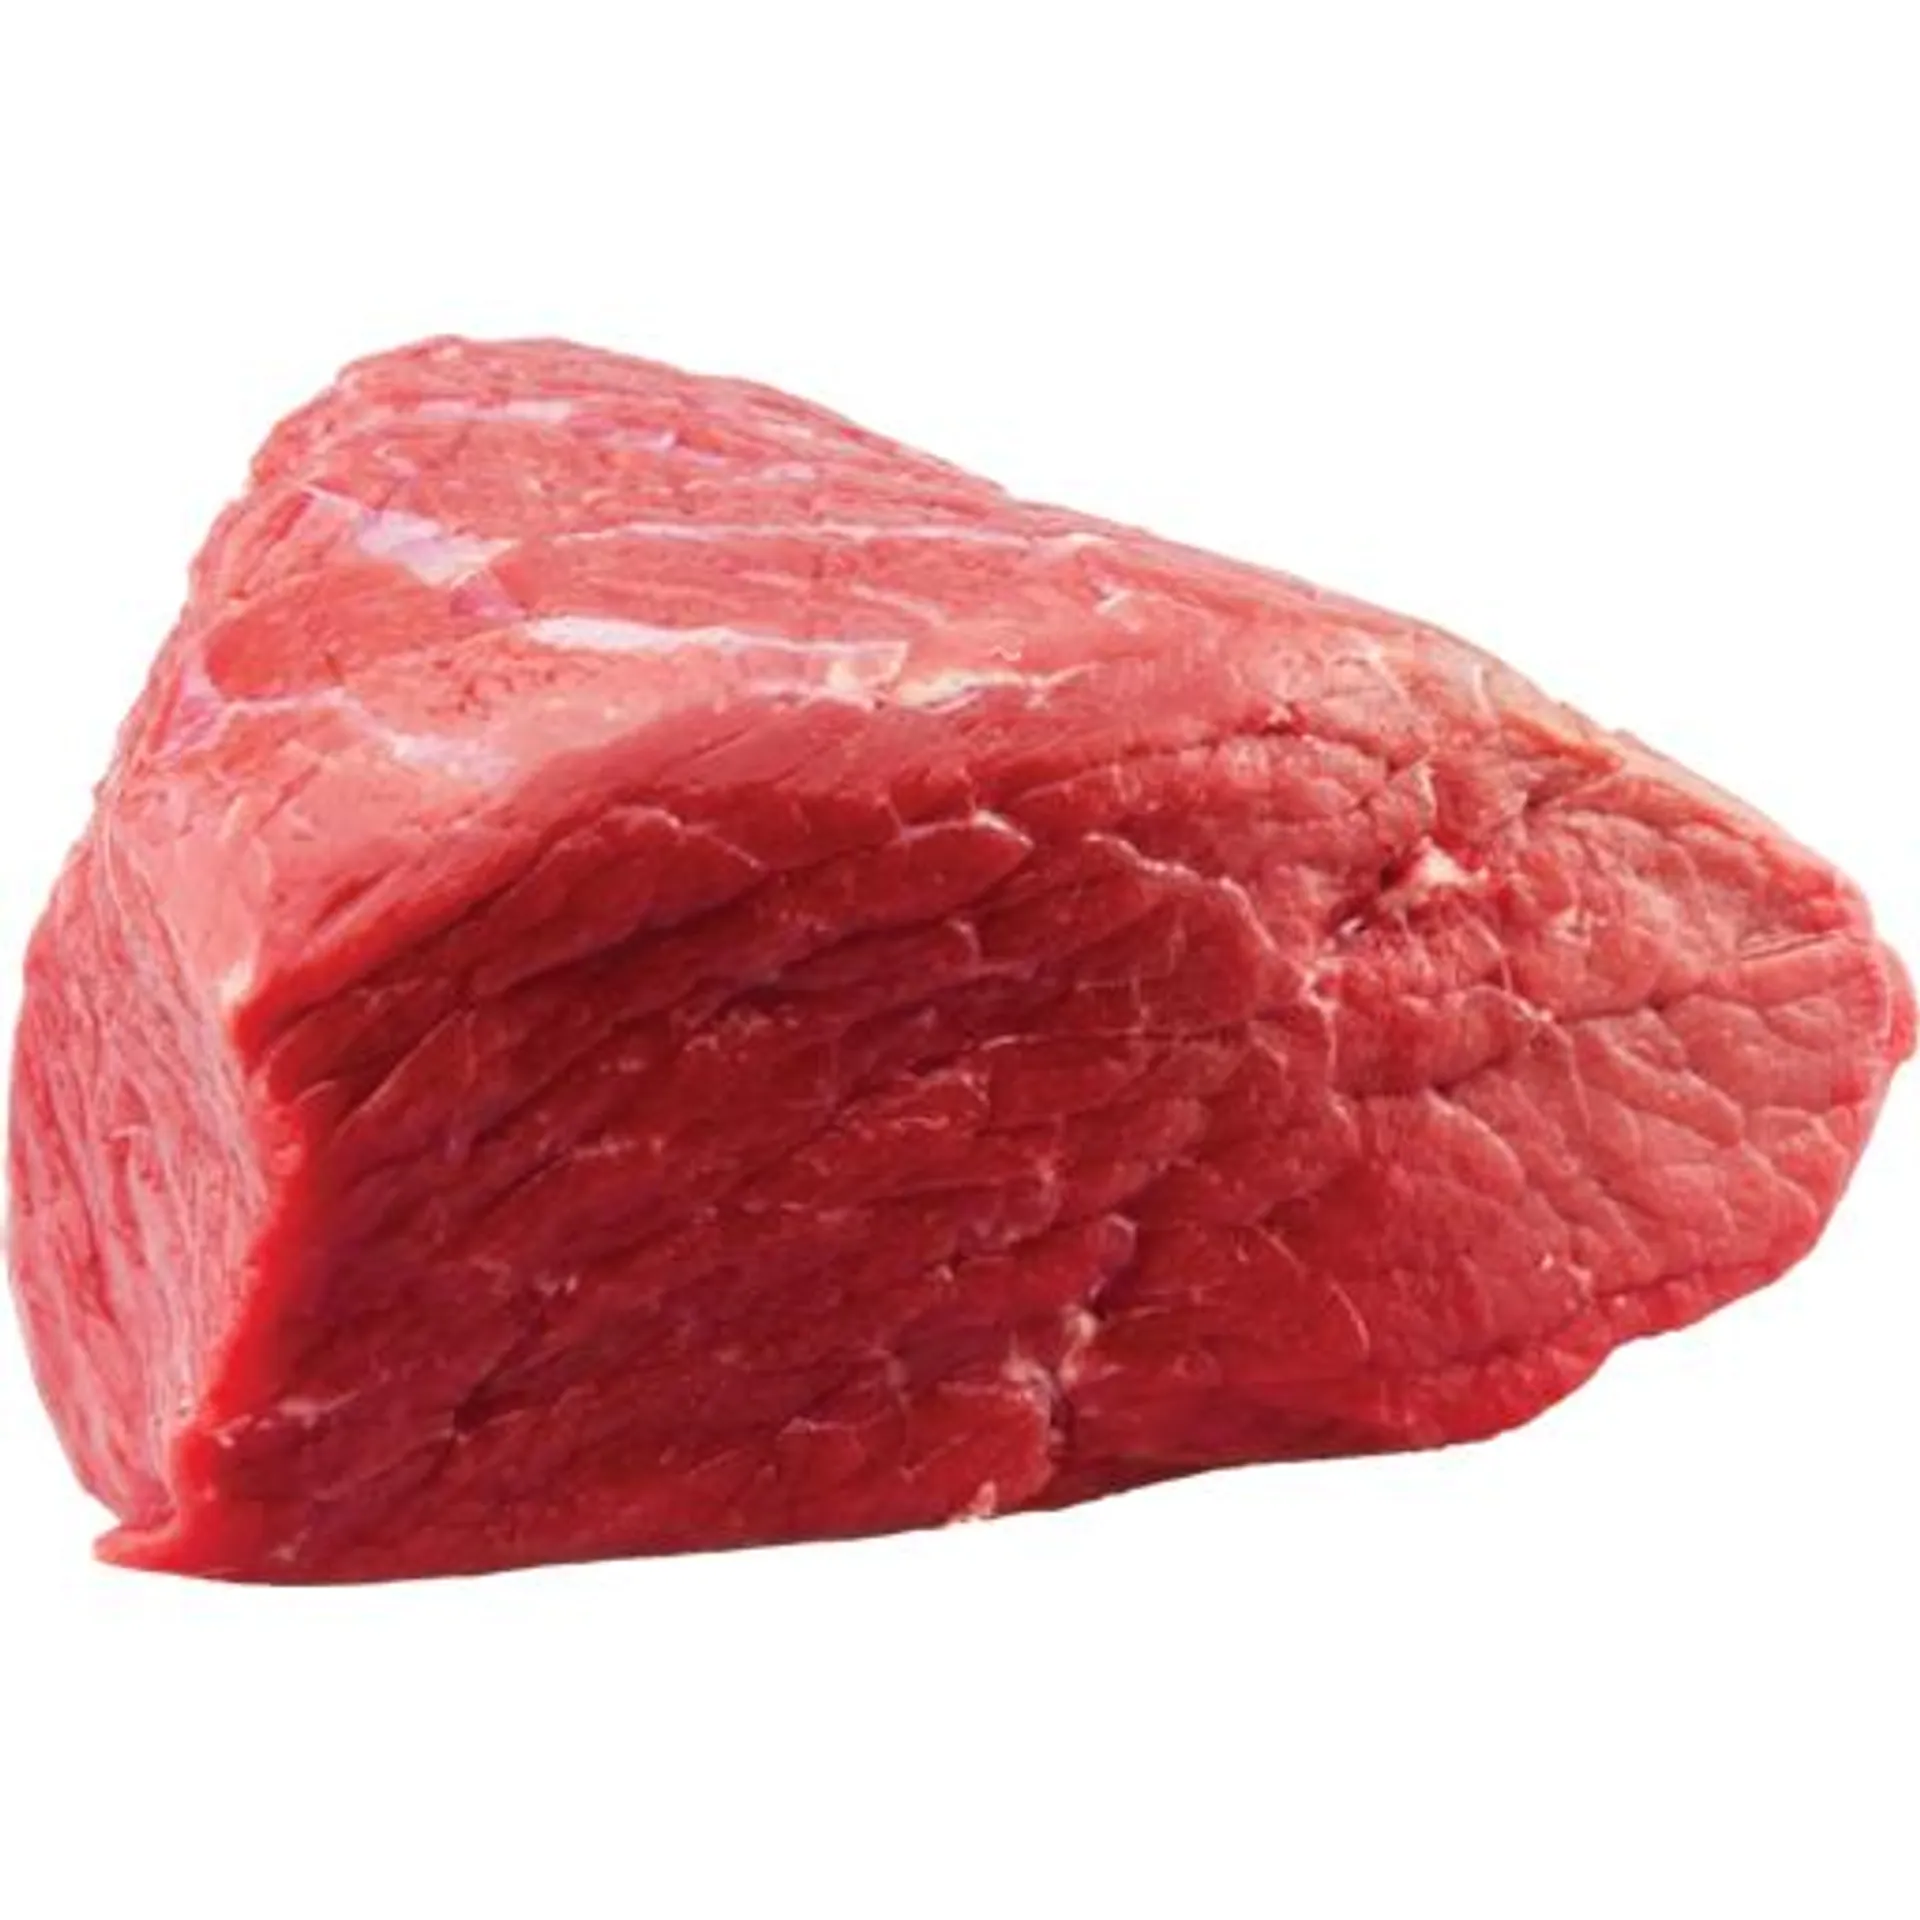 Beef Topside Roast